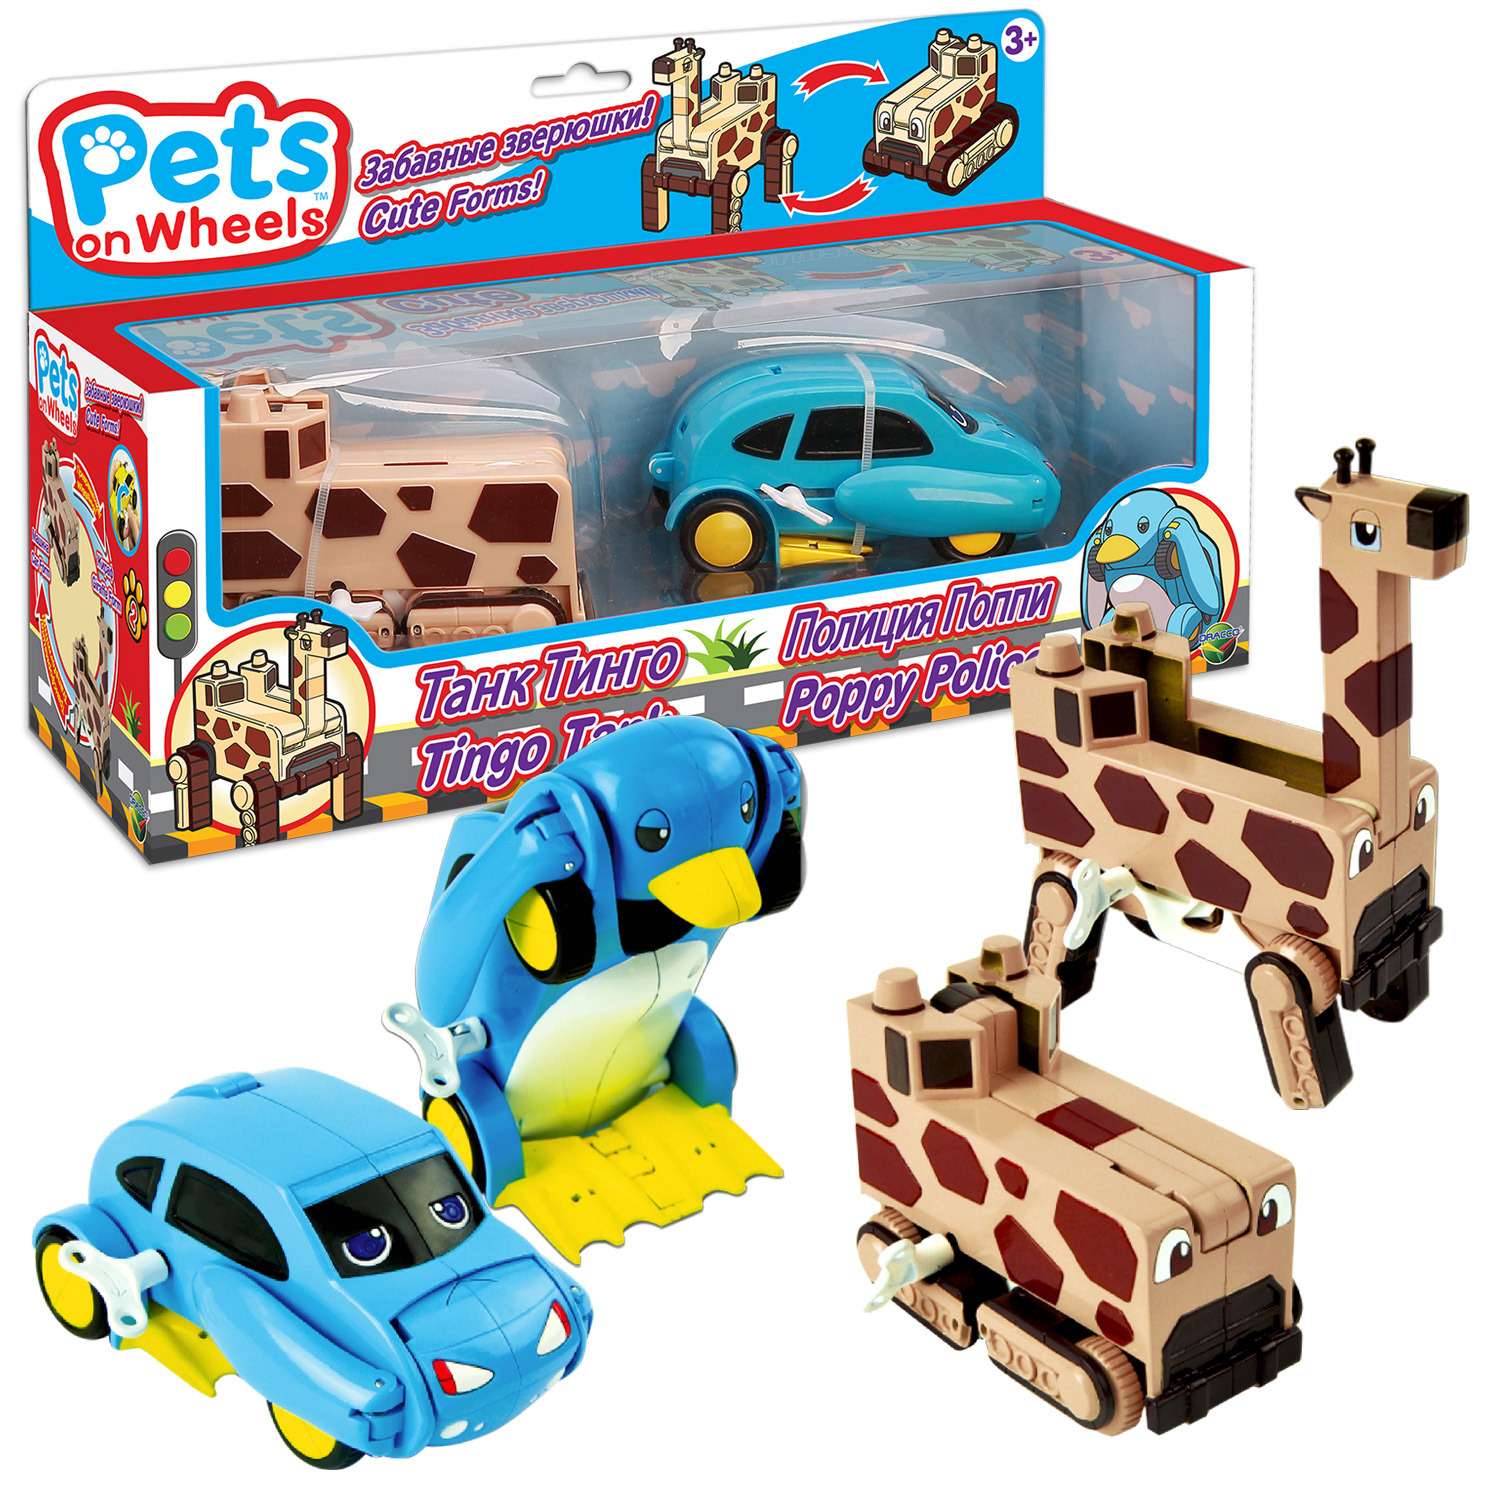 Набор игрушек Pets on wheels 2 фигурки - фото 2